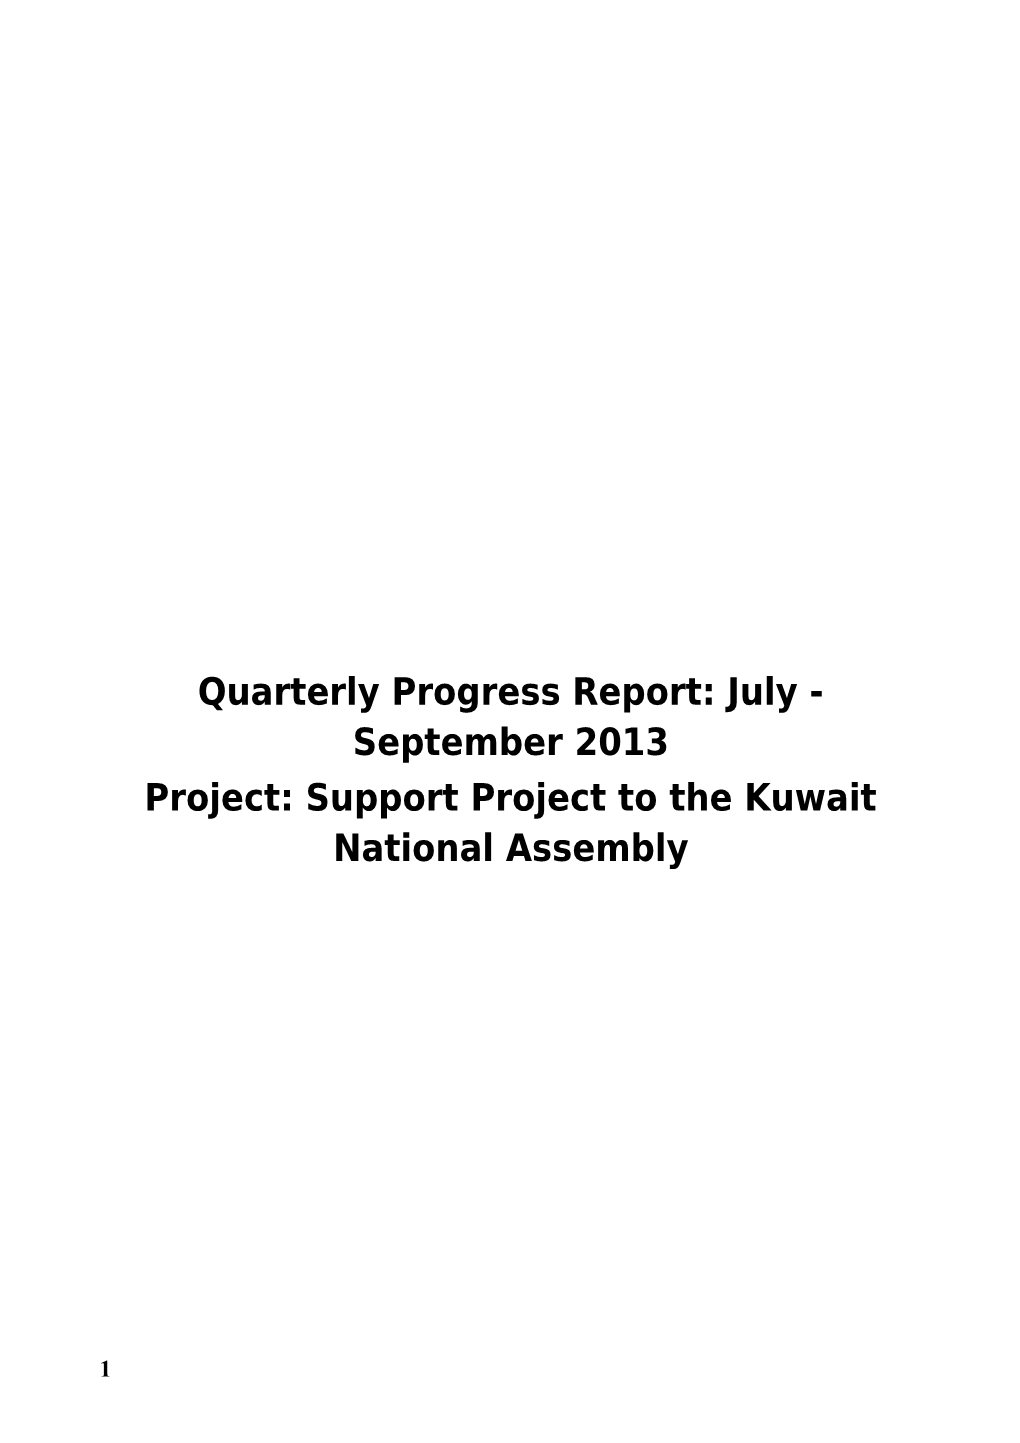 National Assembly Project - 2013 Quarter 3 Progress Report